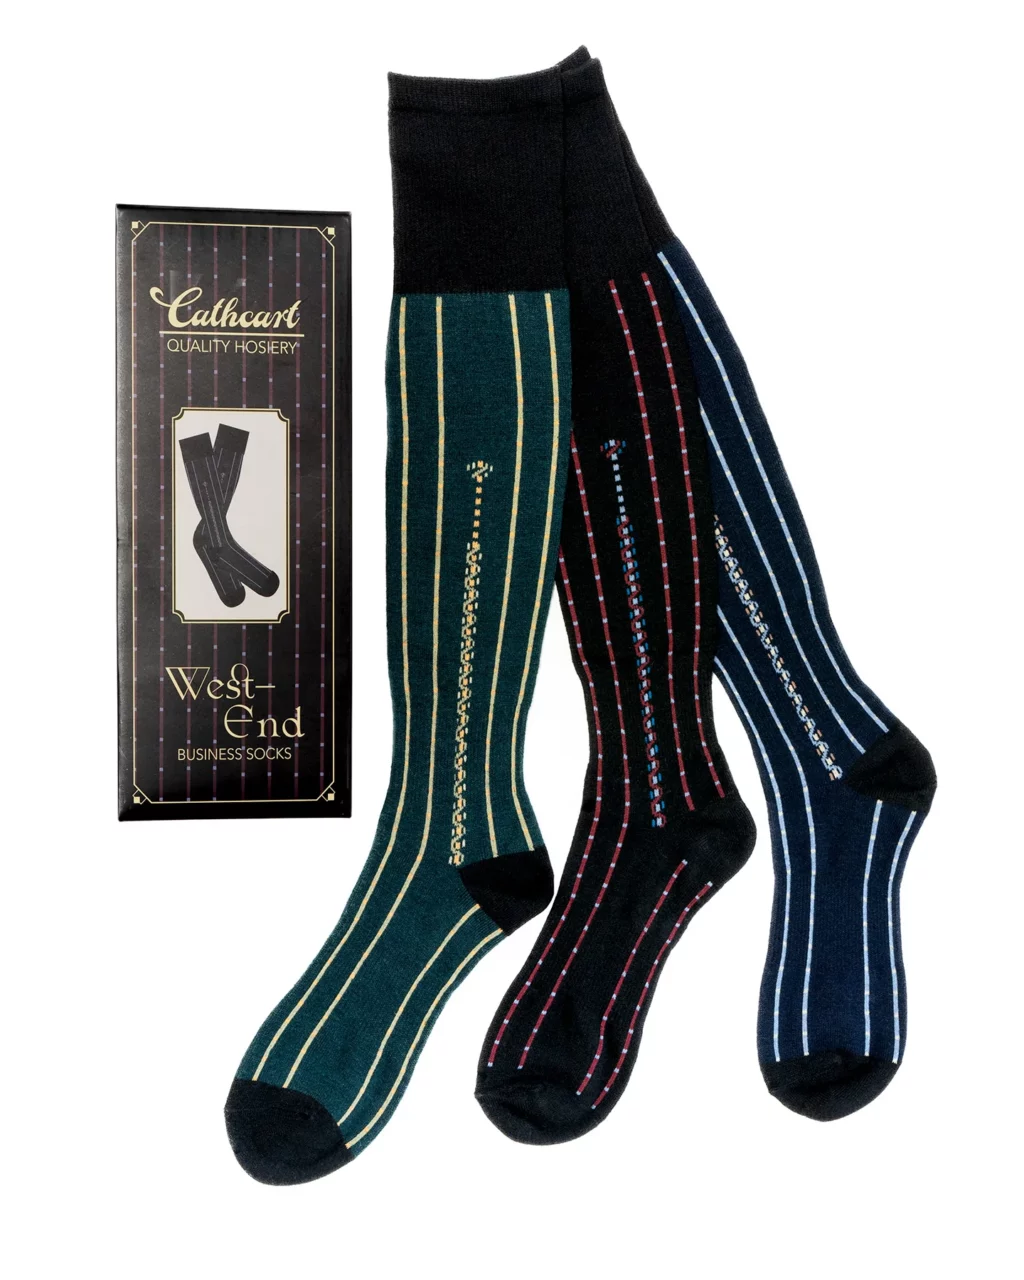 Gentleman’s West End Socks Knee High by Cathcart. ONE pair